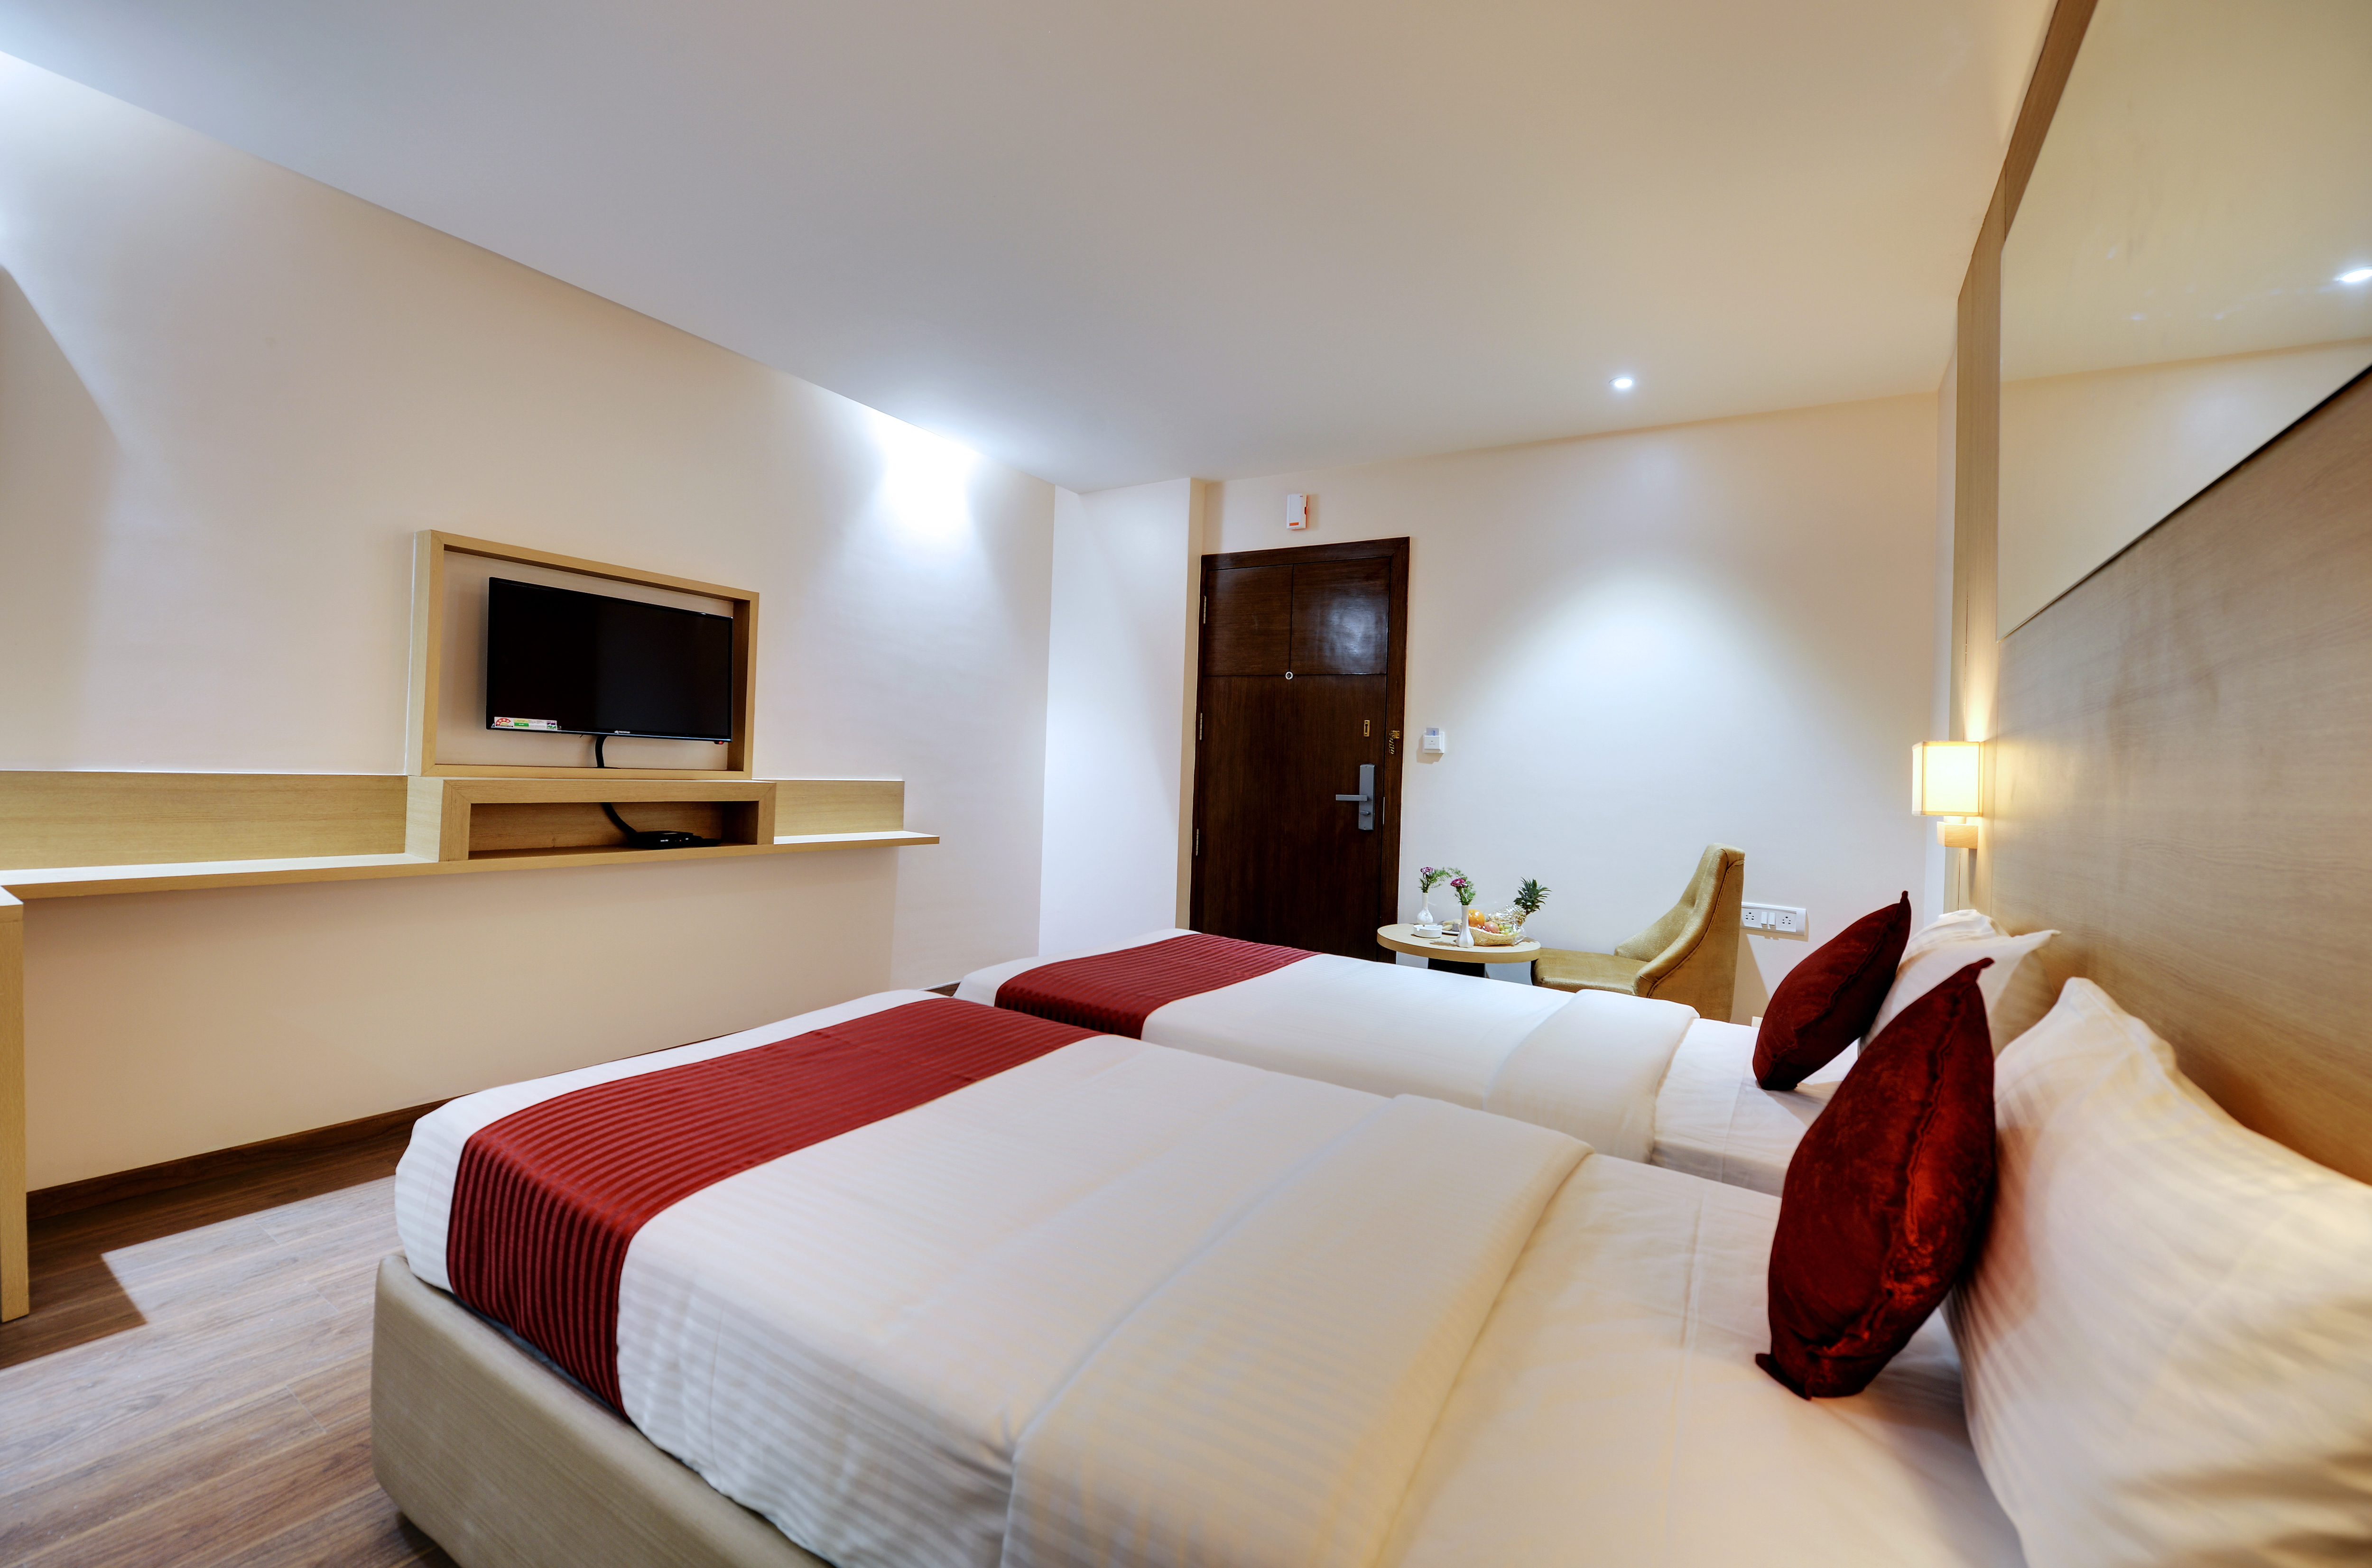 Club Room Hotel Nandhana Pride Bangalore Best Hotels 3